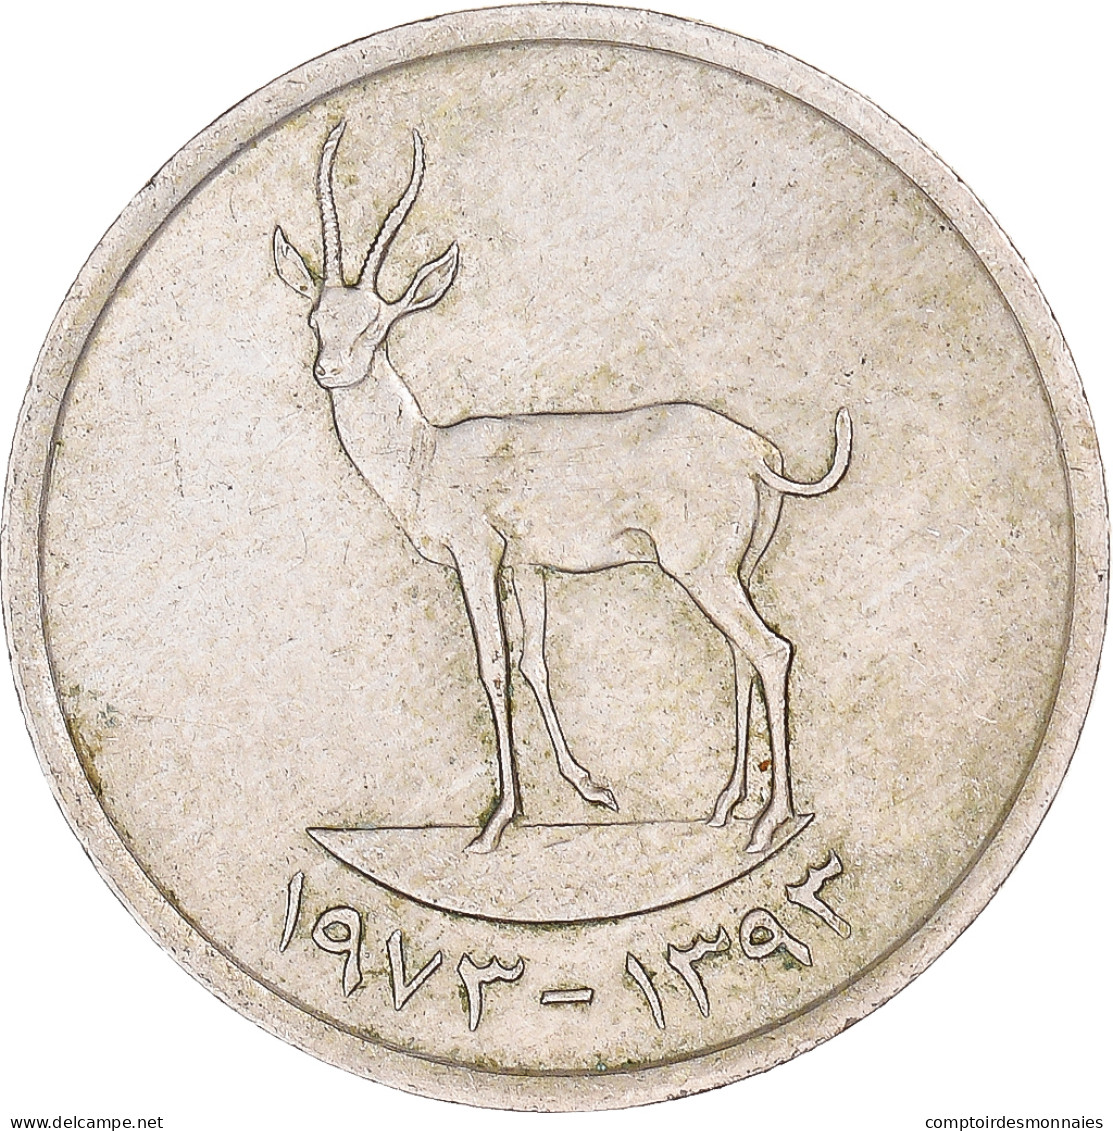 Monnaie, Émirats Arabes Unis, 25 Fils, 1973 - United Arab Emirates